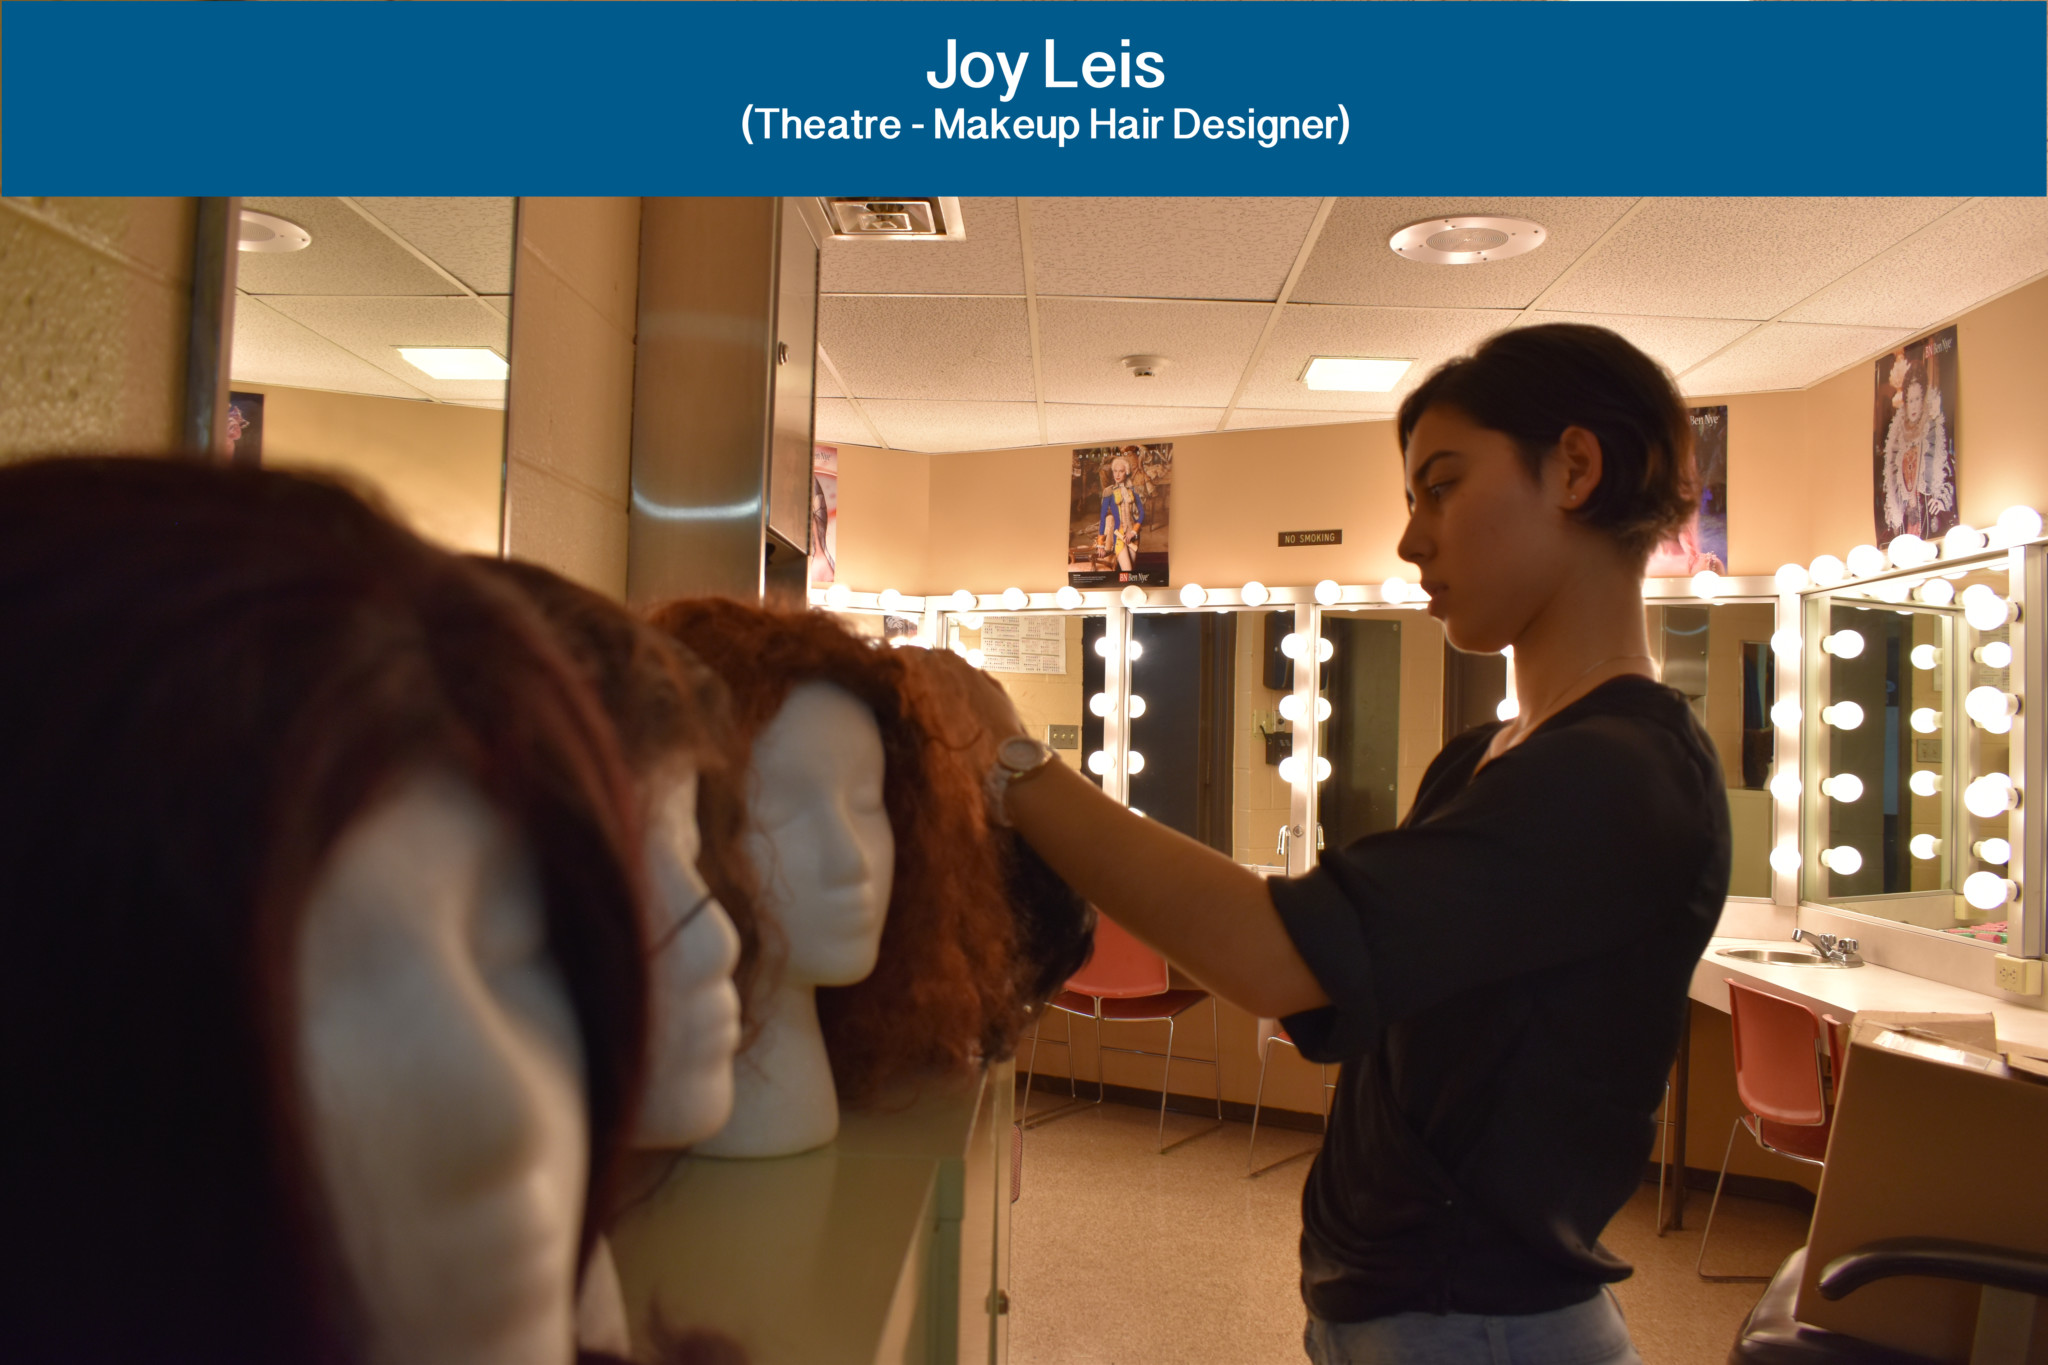 Joy, hair designer and makeup artist at Theatre